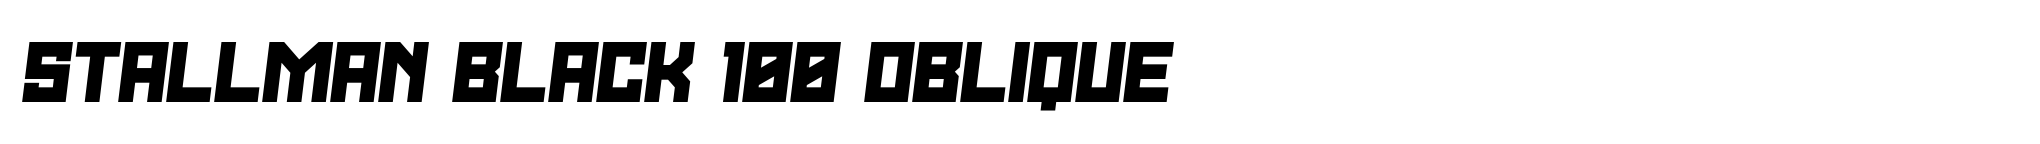 Stallman Black 100 Oblique image